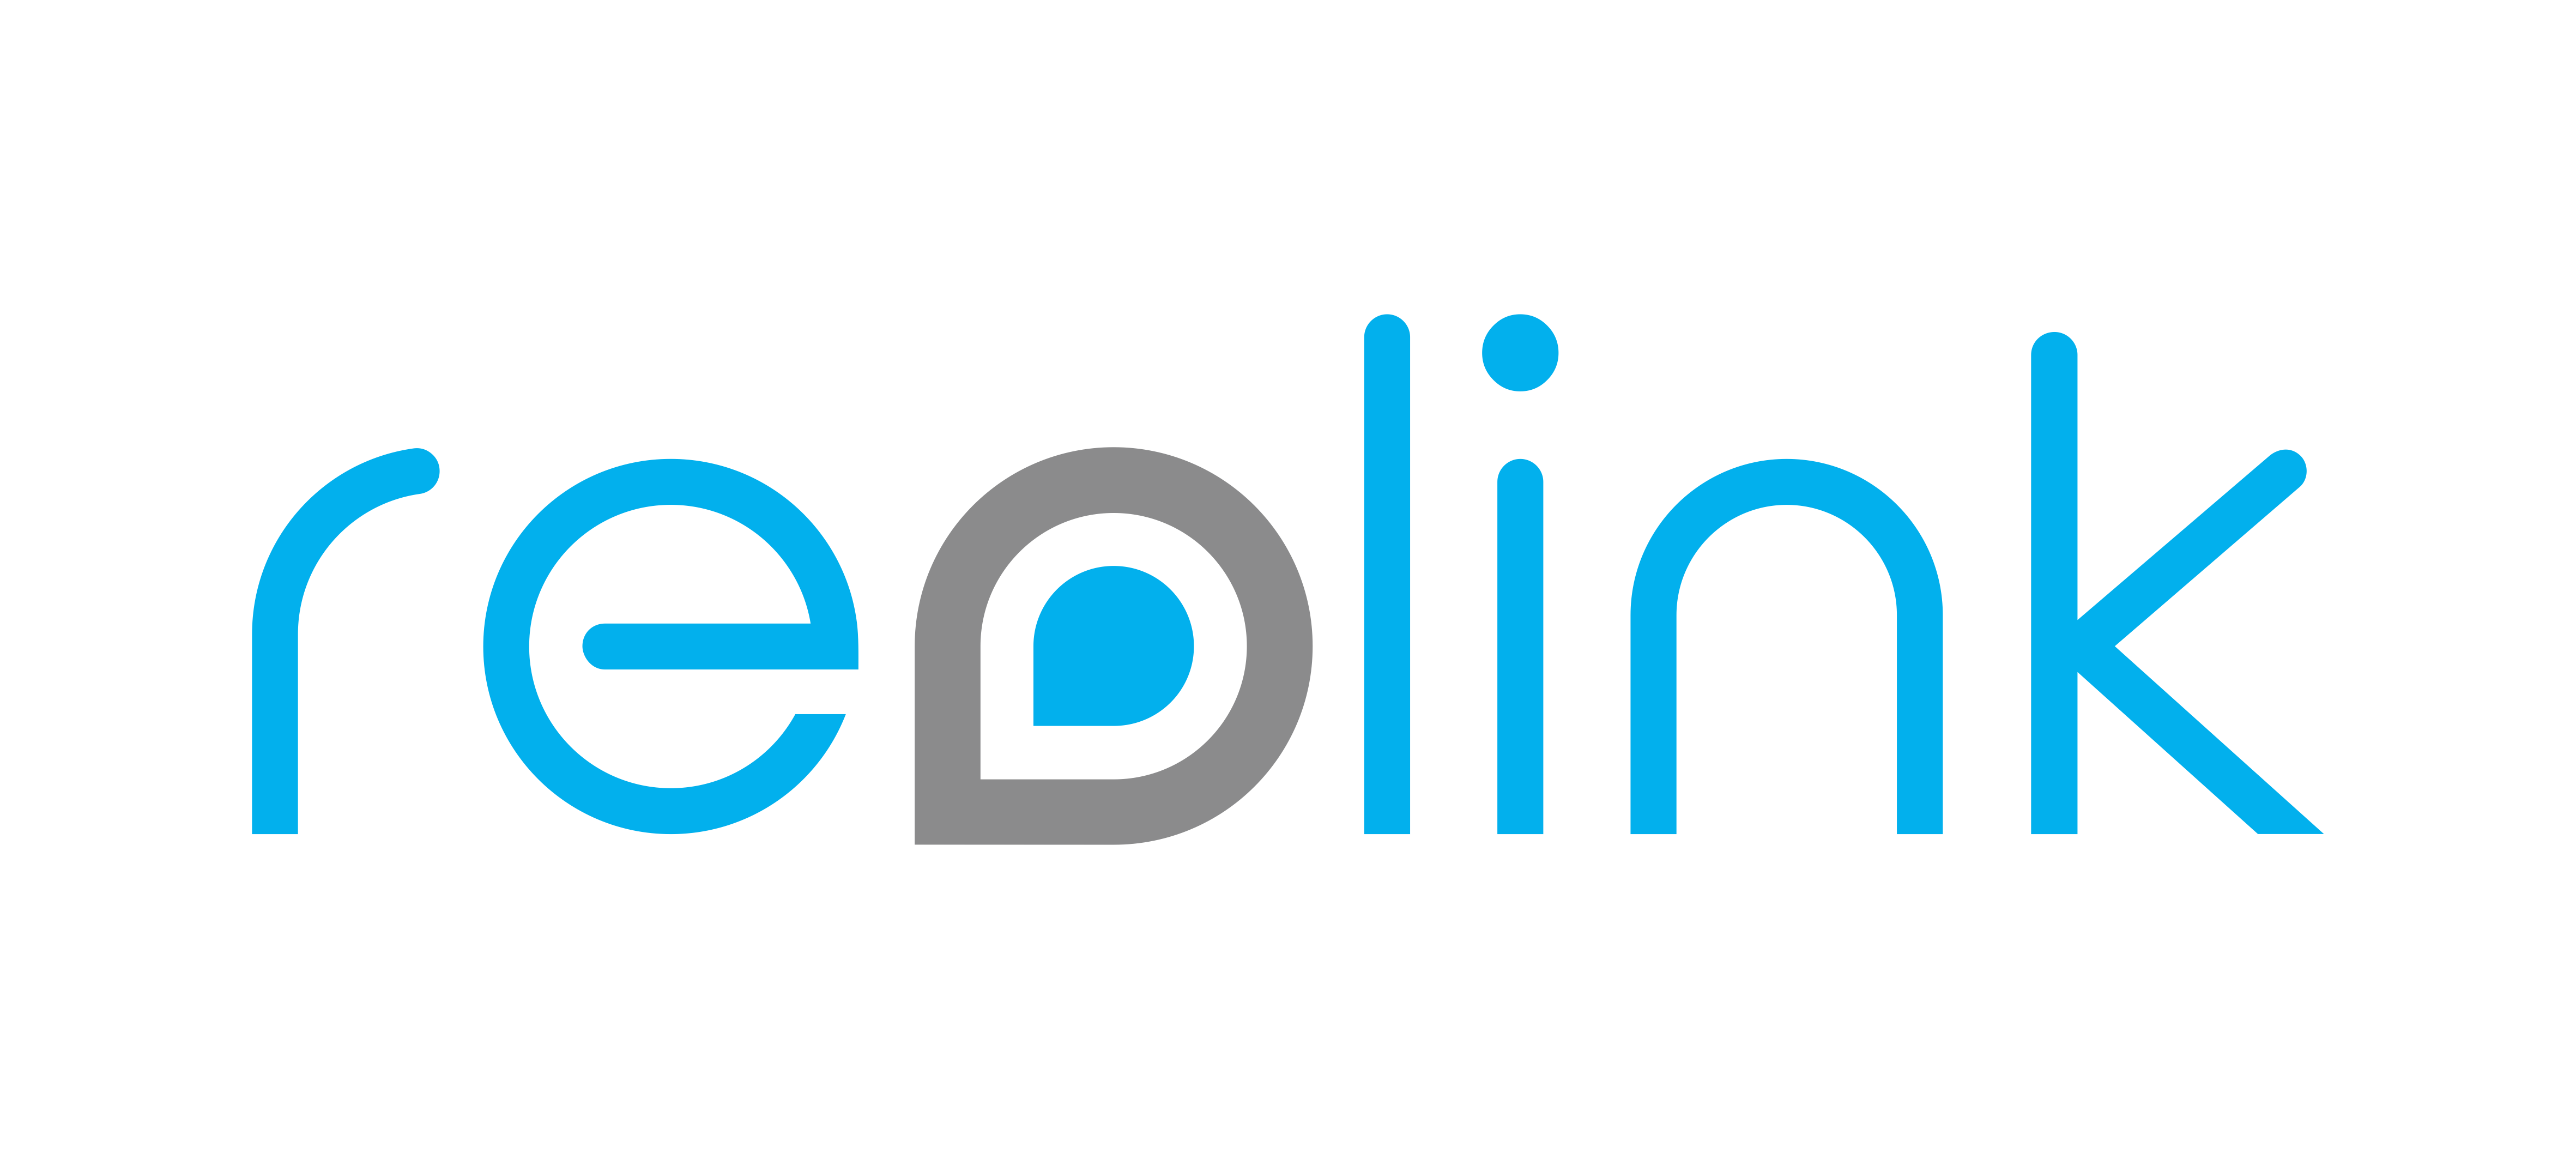 Reolink logo